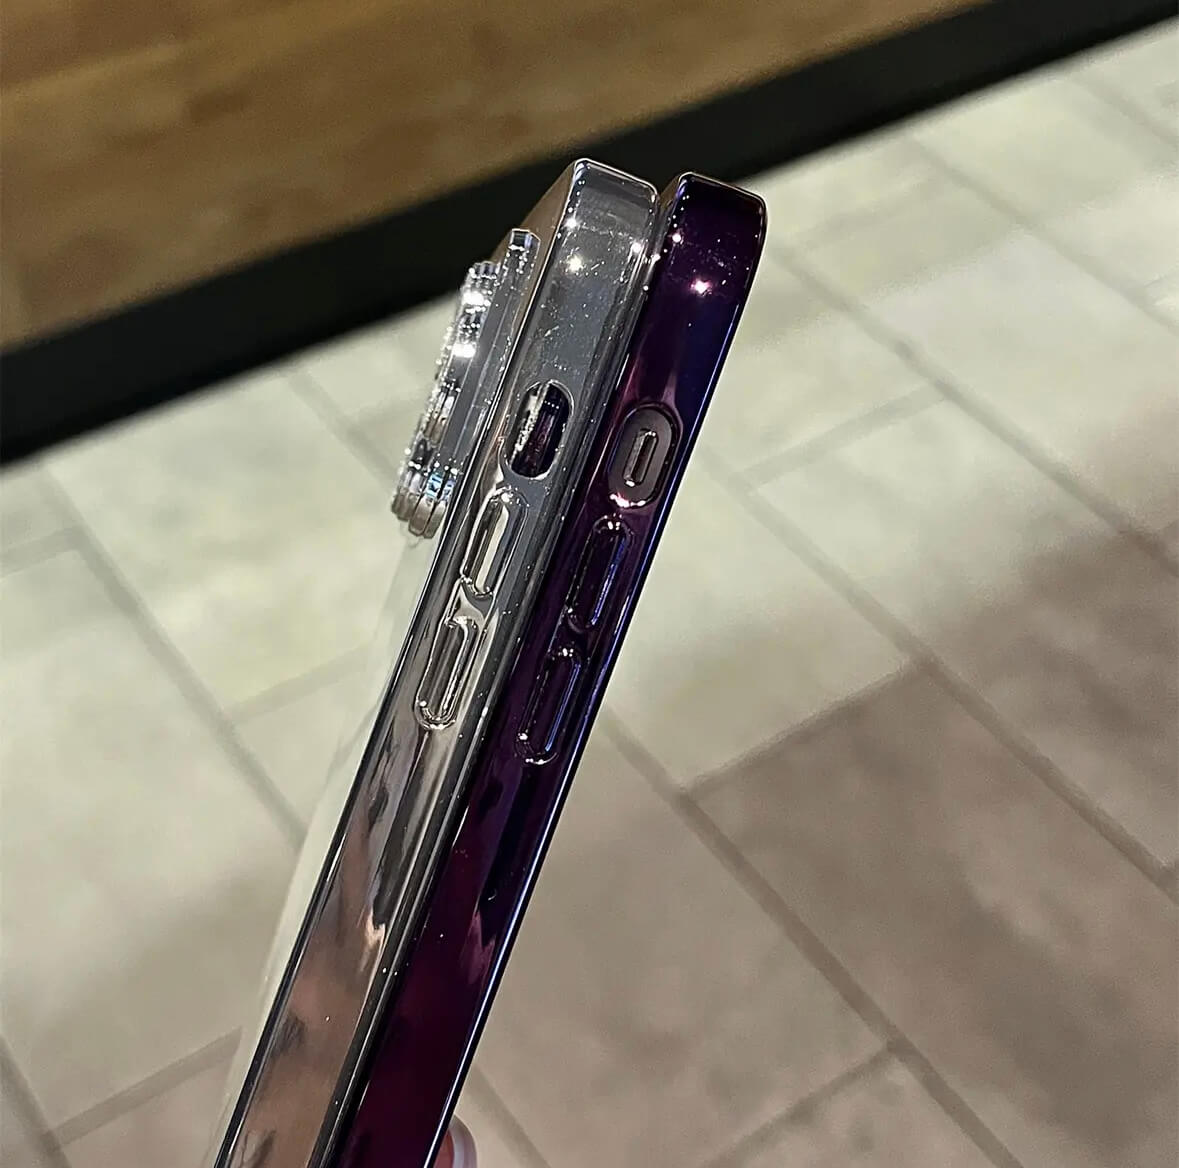 Transparent Shiny Silicone Soft Case Phone Case Apple_Shopier